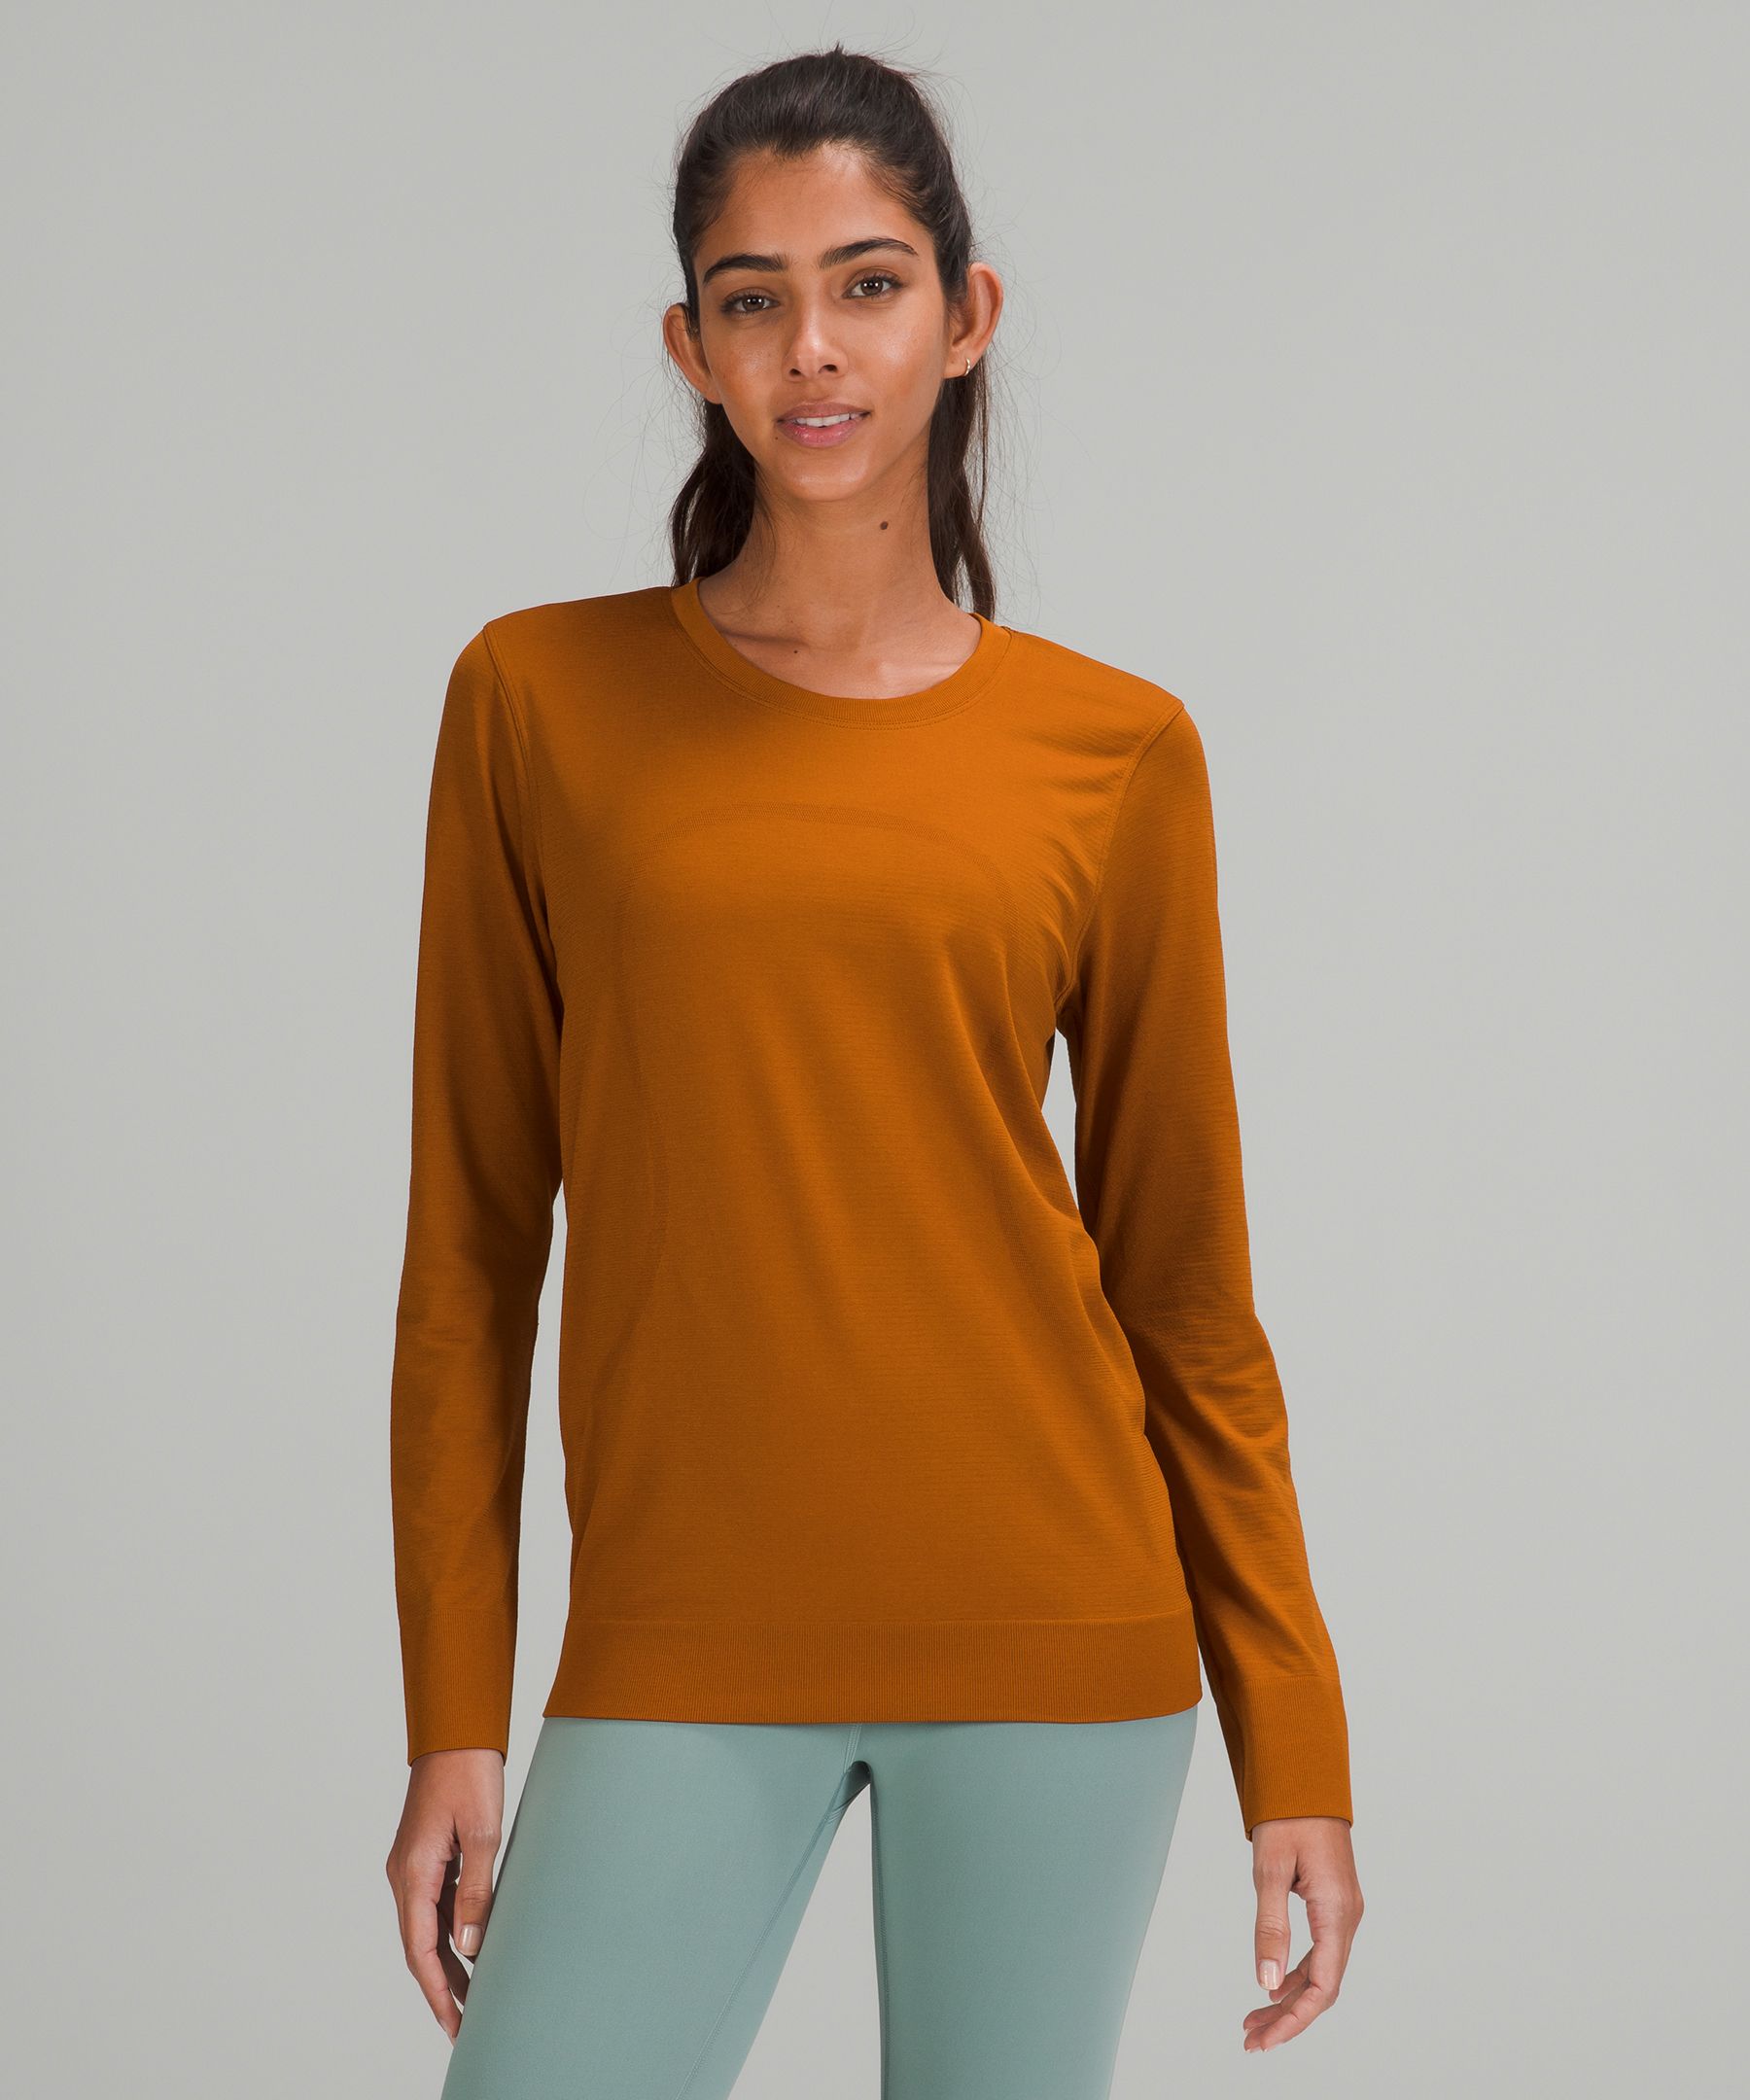 Lululemon Swiftly Relaxed-fit Long Sleeve Shirt In Butternut Brown/butternut Brown